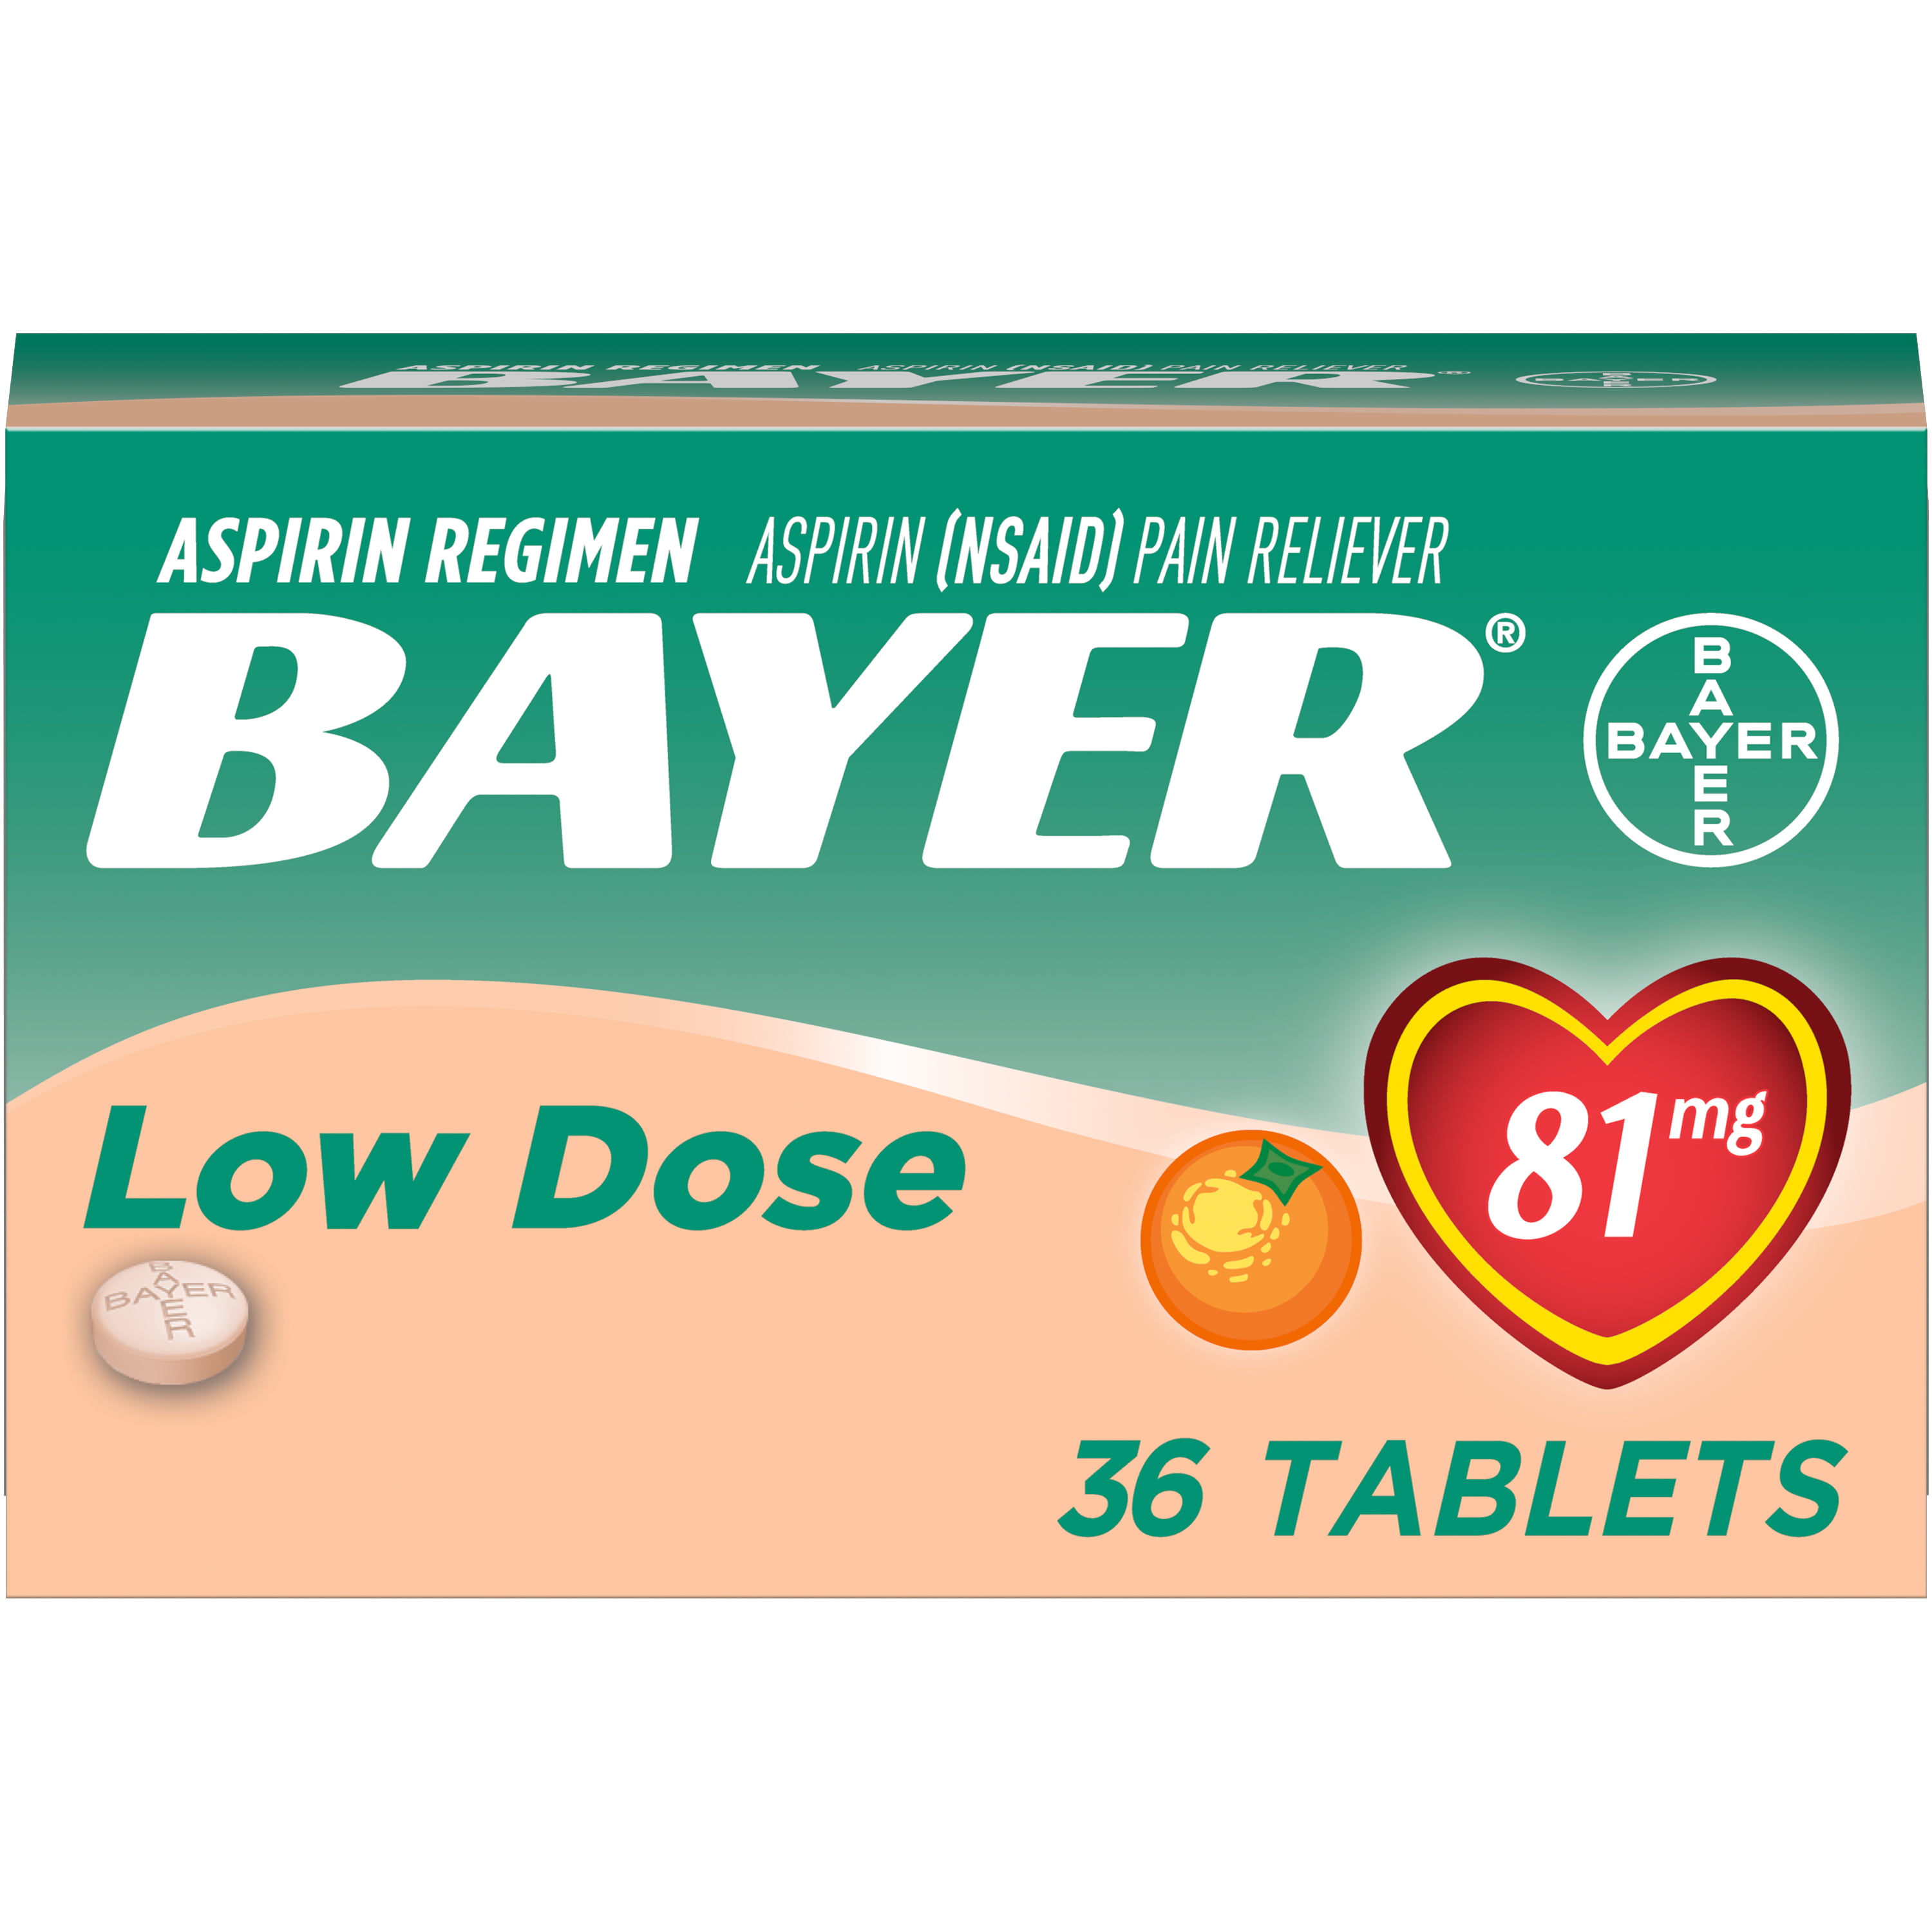 is bayer aspirin good for fever